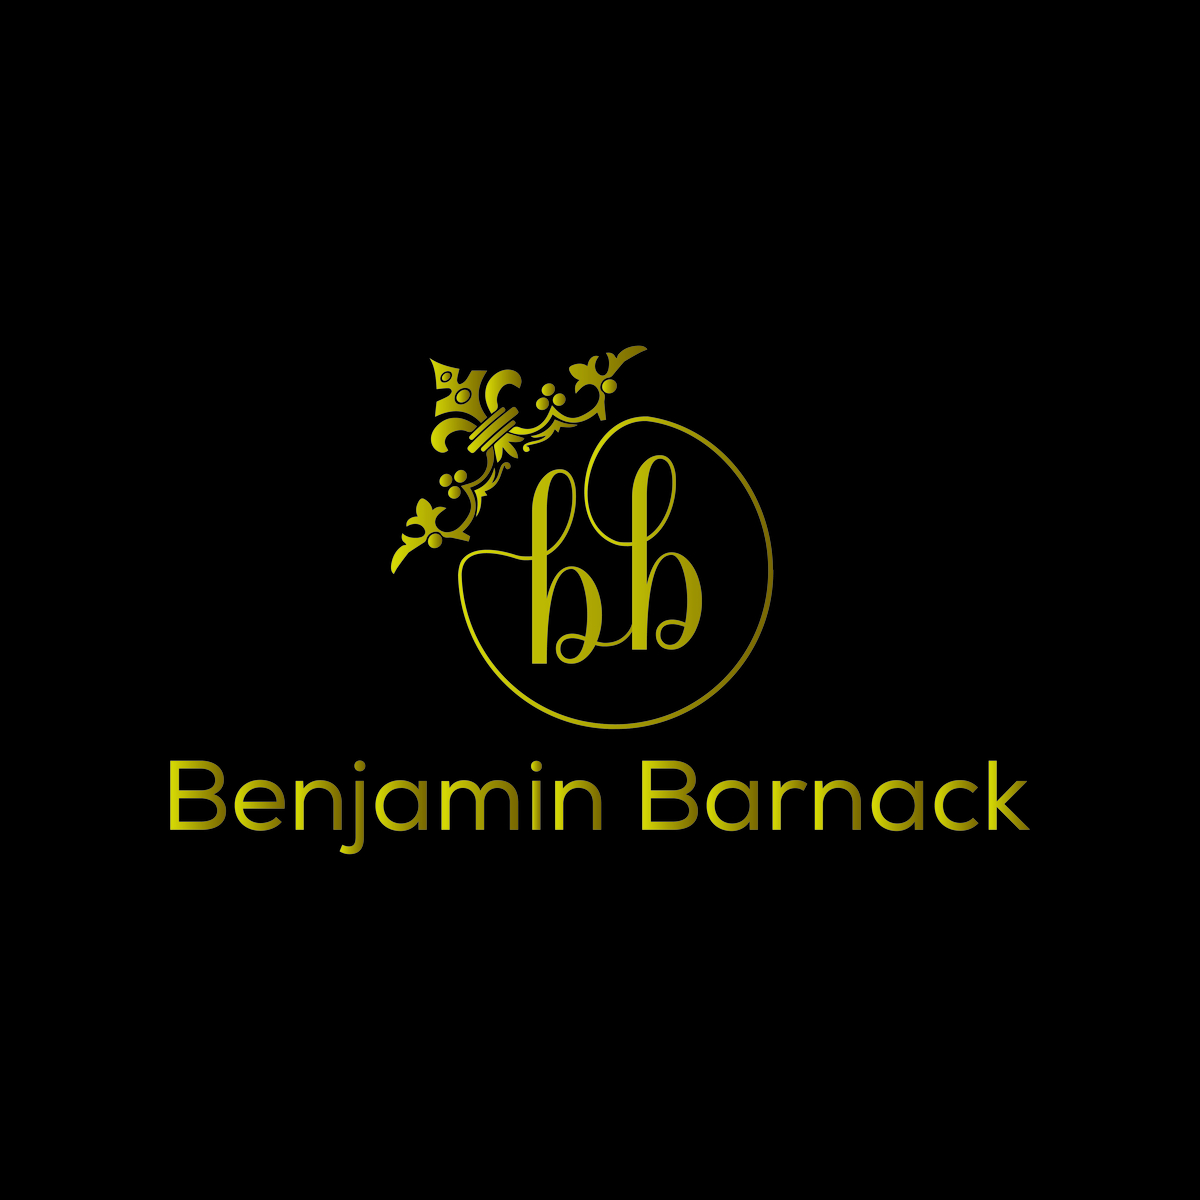 Benjamin Barnack Logo by Jubayer Khan Akash on Dribbble